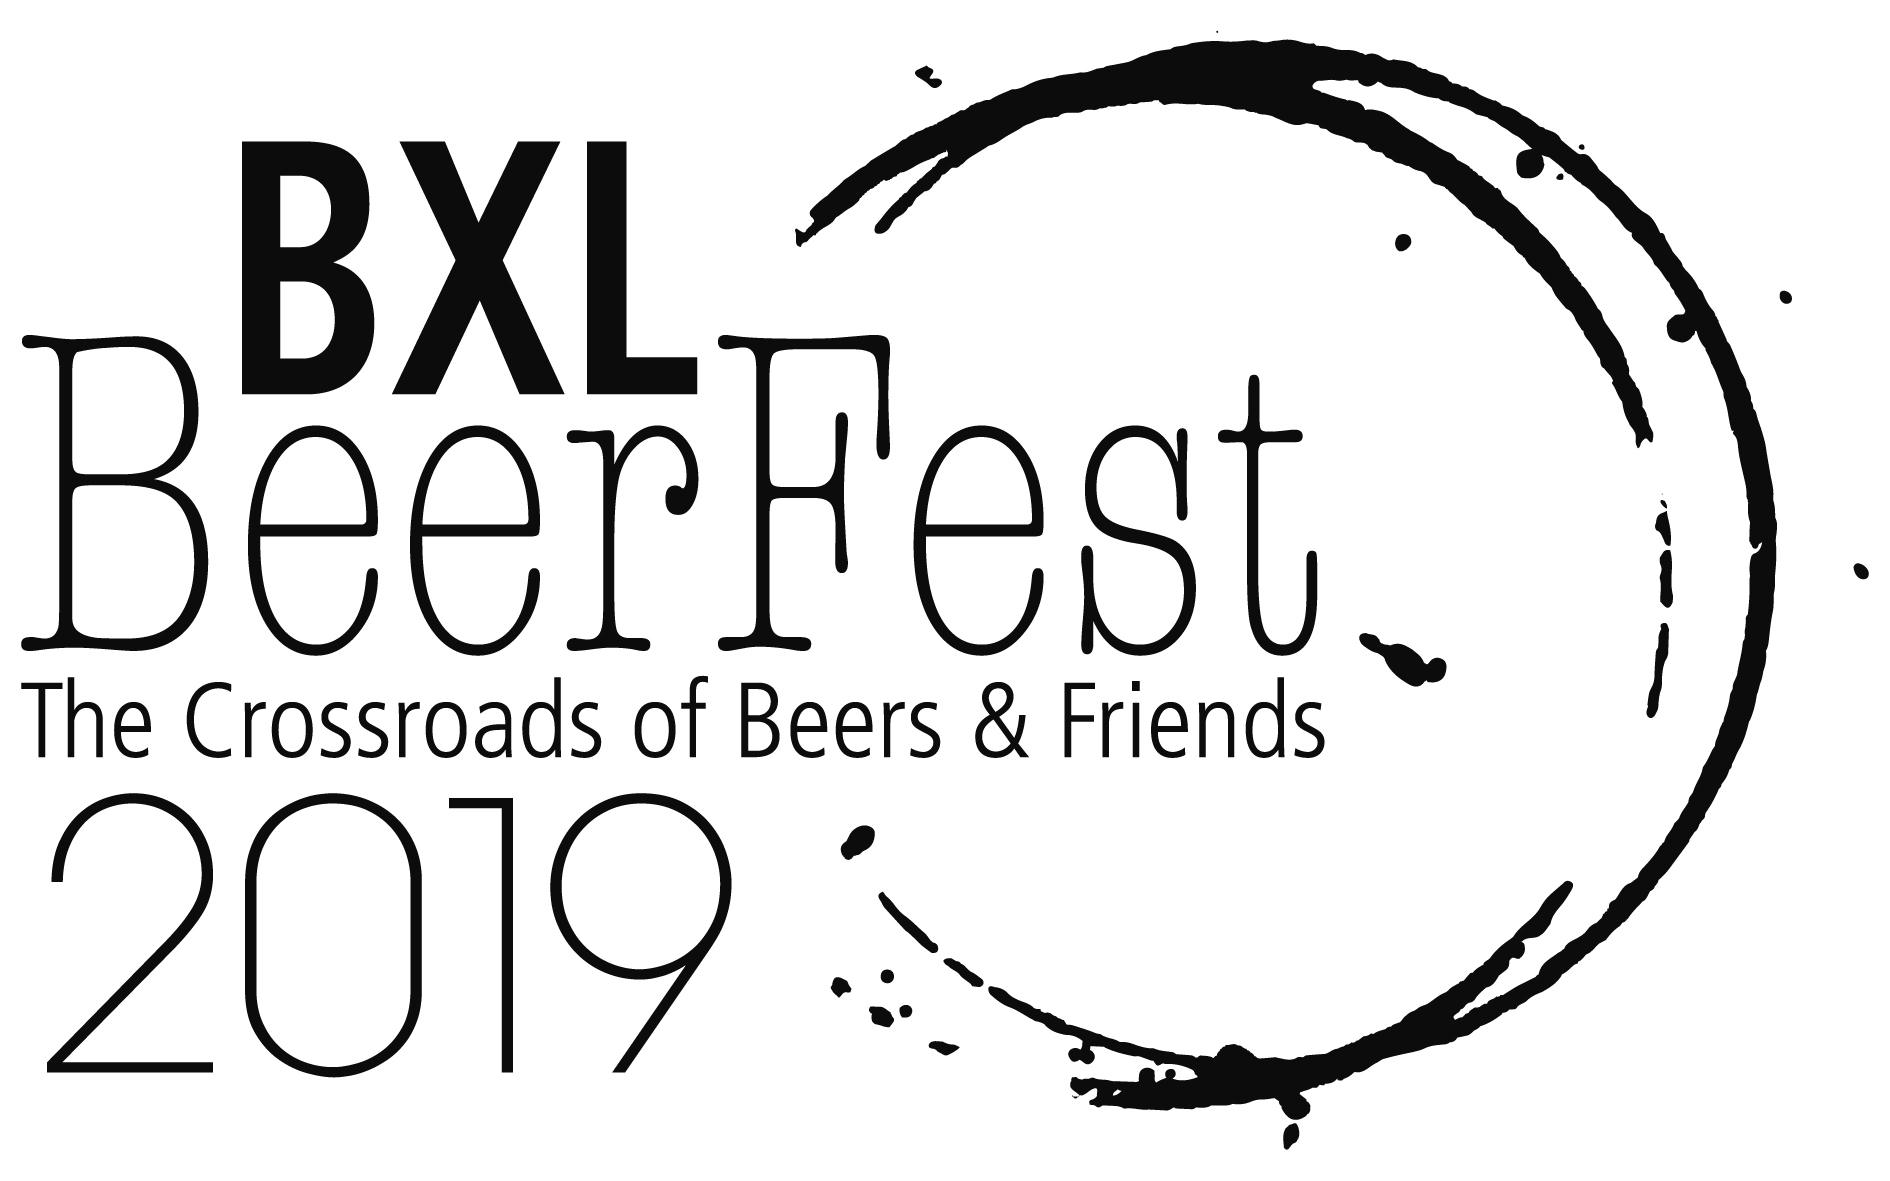 BxlBeerFest 2019